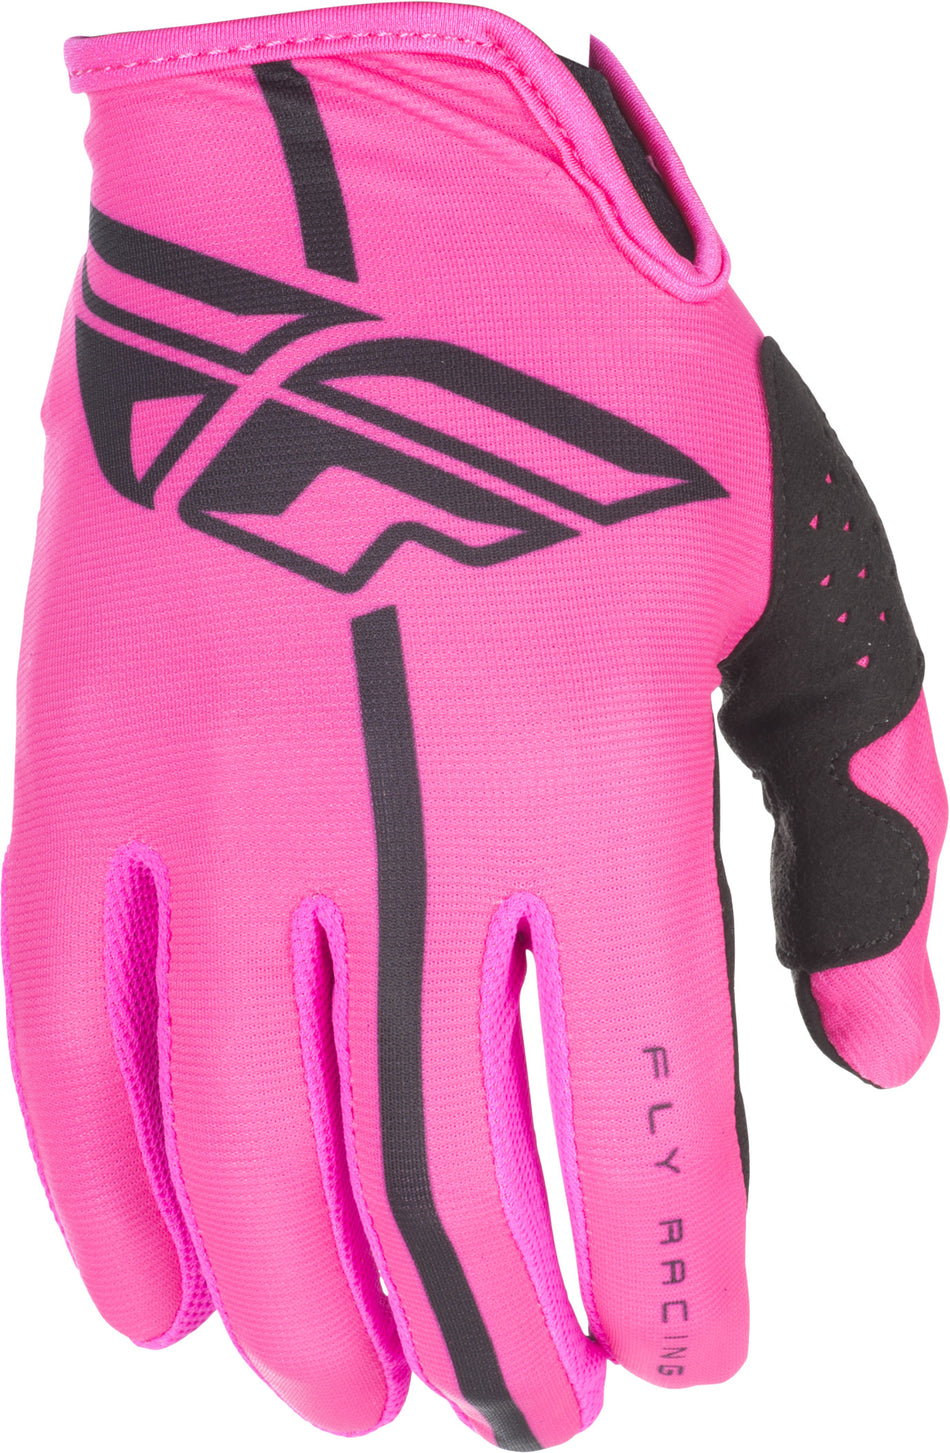 FLY RACING Lite Gloves Neon Pink/Black Sz 6 371-01906